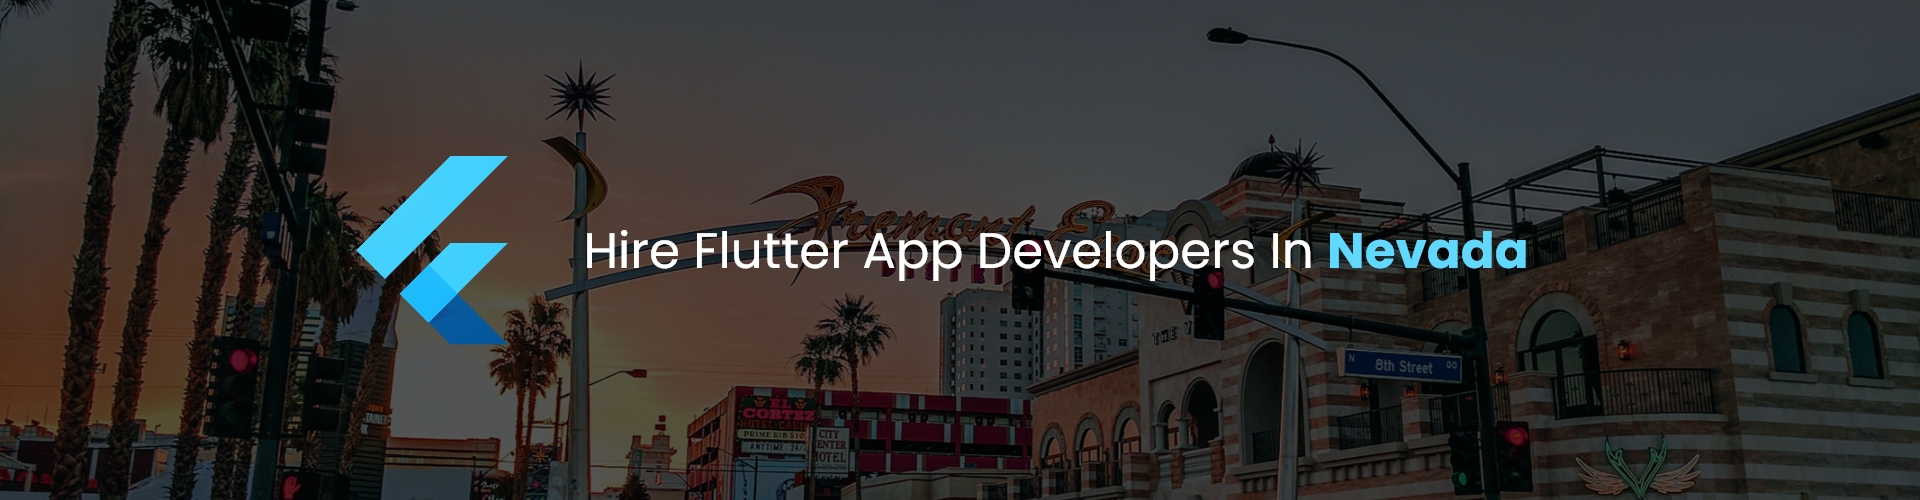 hire flutter app developers in nevada